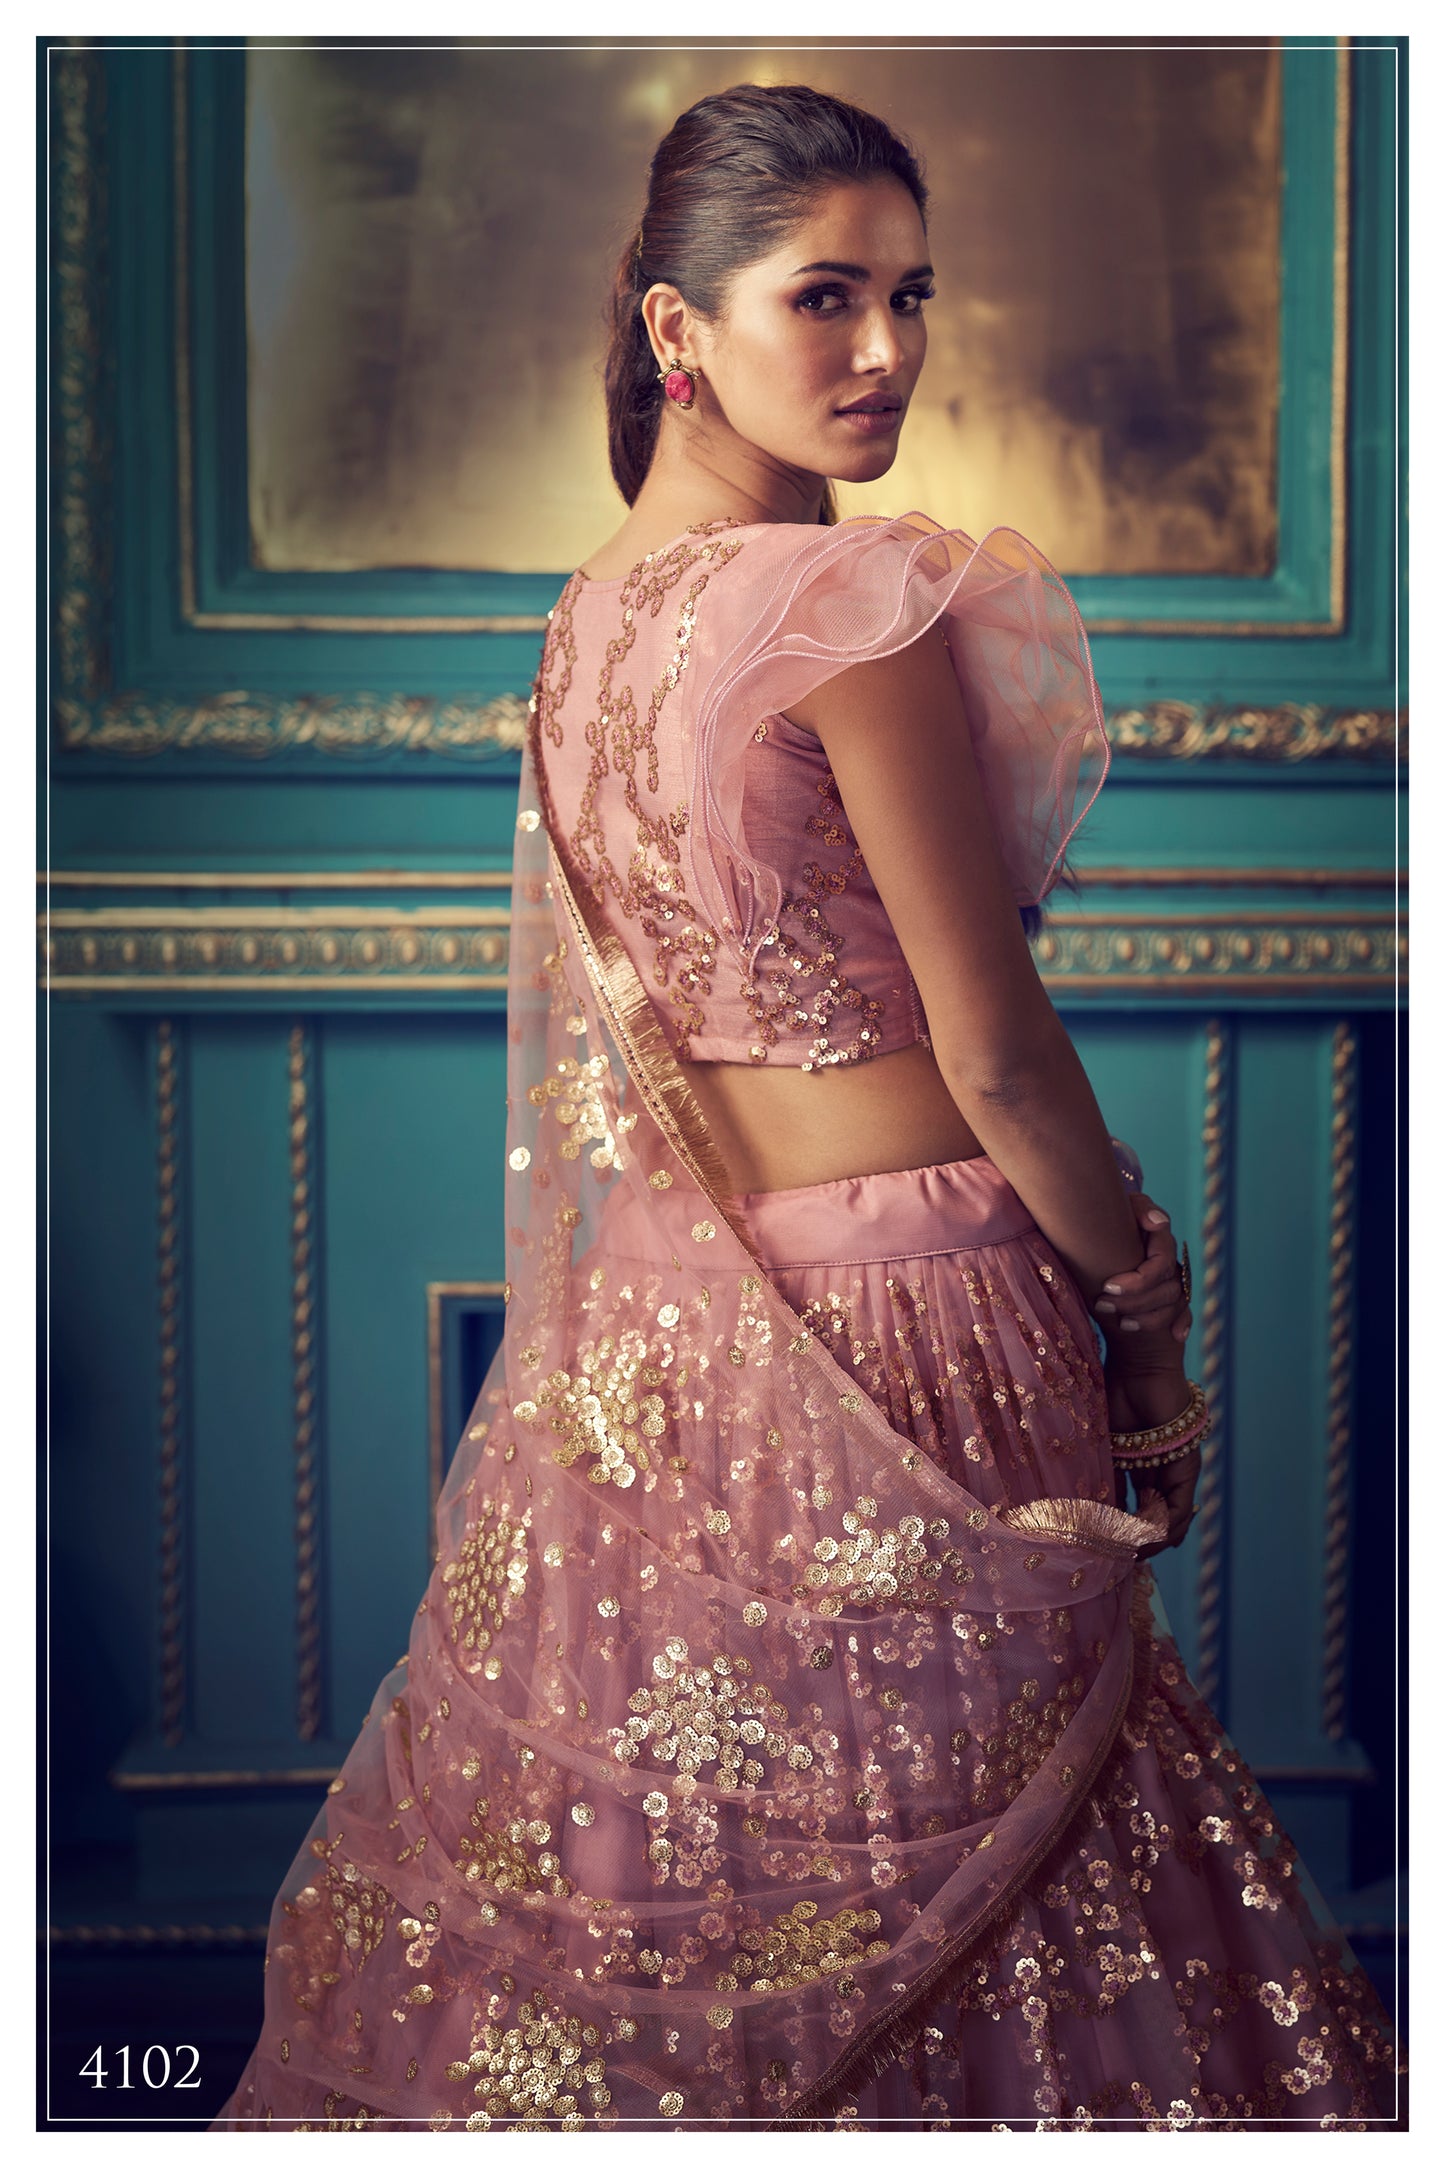 Rose pink color attractive designer lehenga choli for wedding buy it now